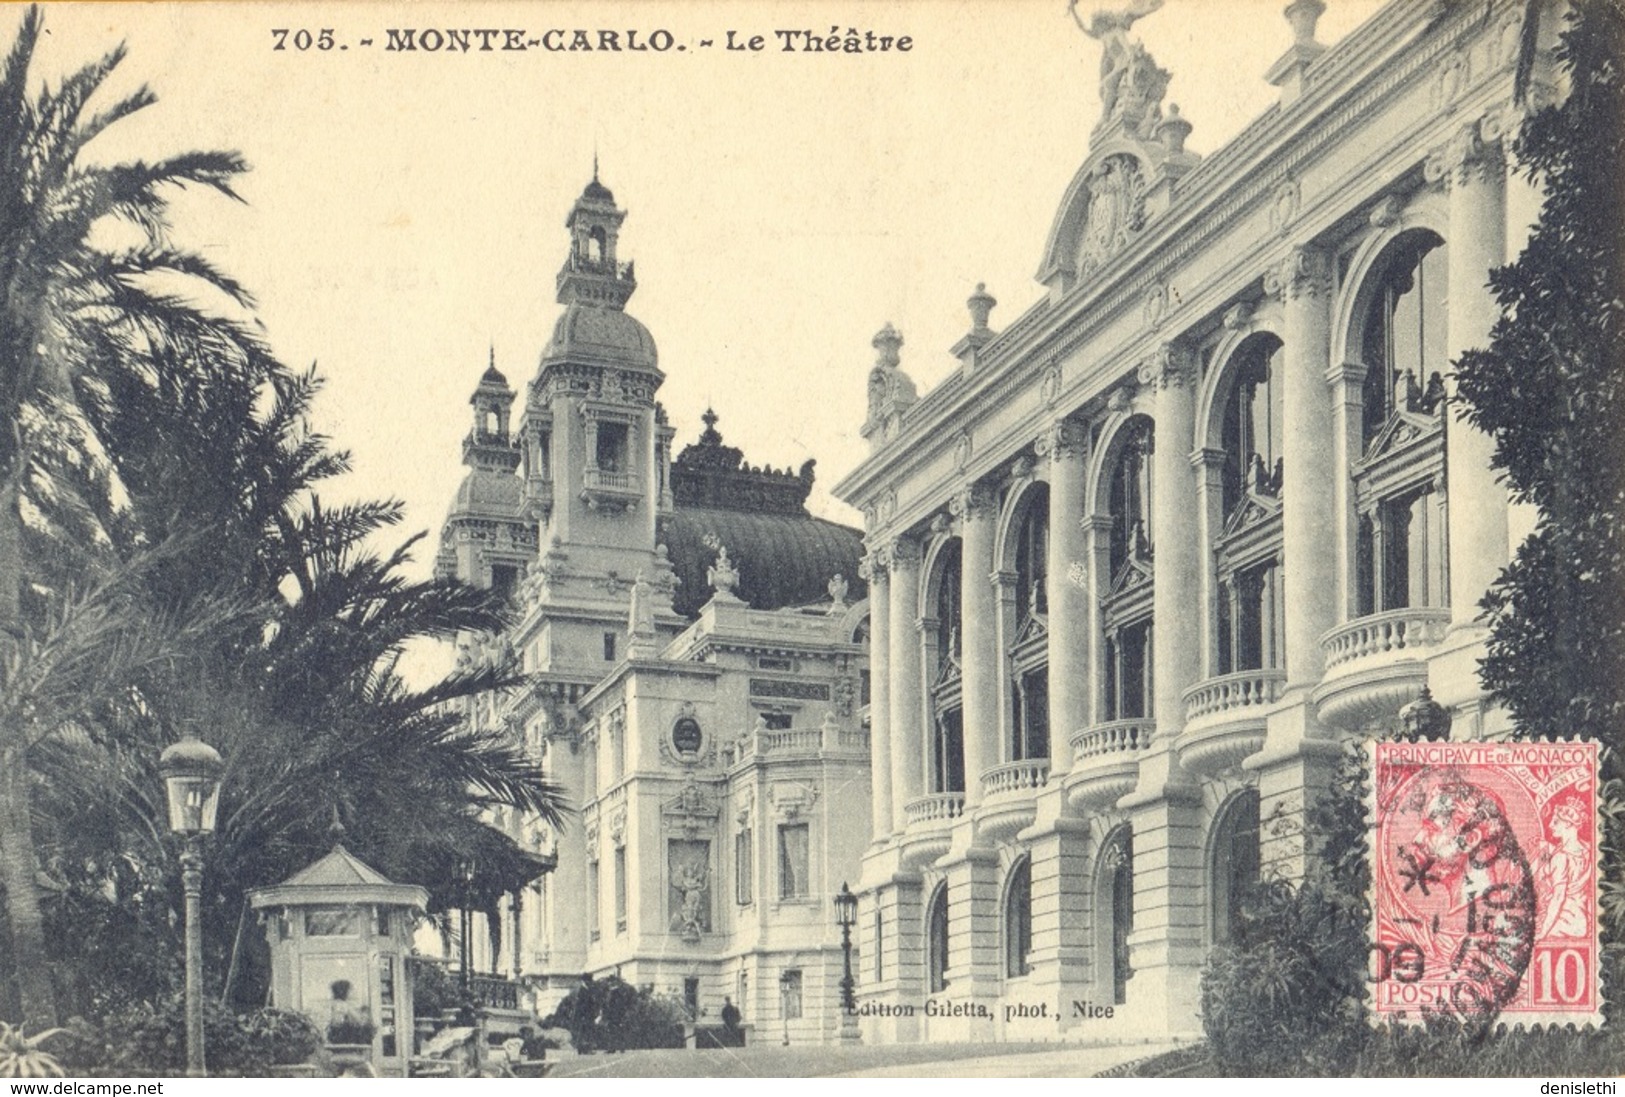 MONTE-CARLO - Le Théâtre - Opera House & Theather